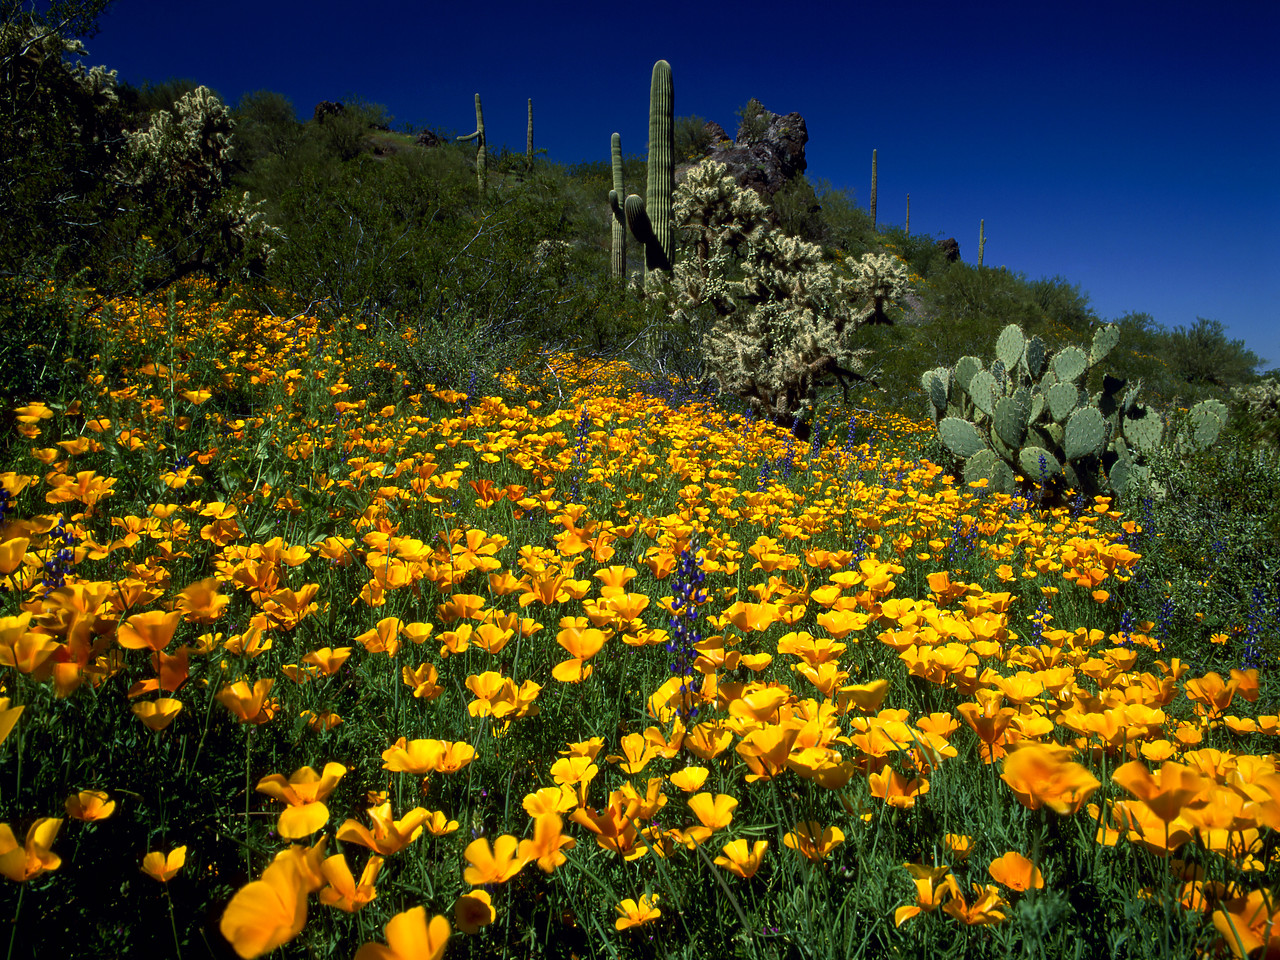 #980612-3 - Mexican Poppies, Picacho Peak, Arizona, USA